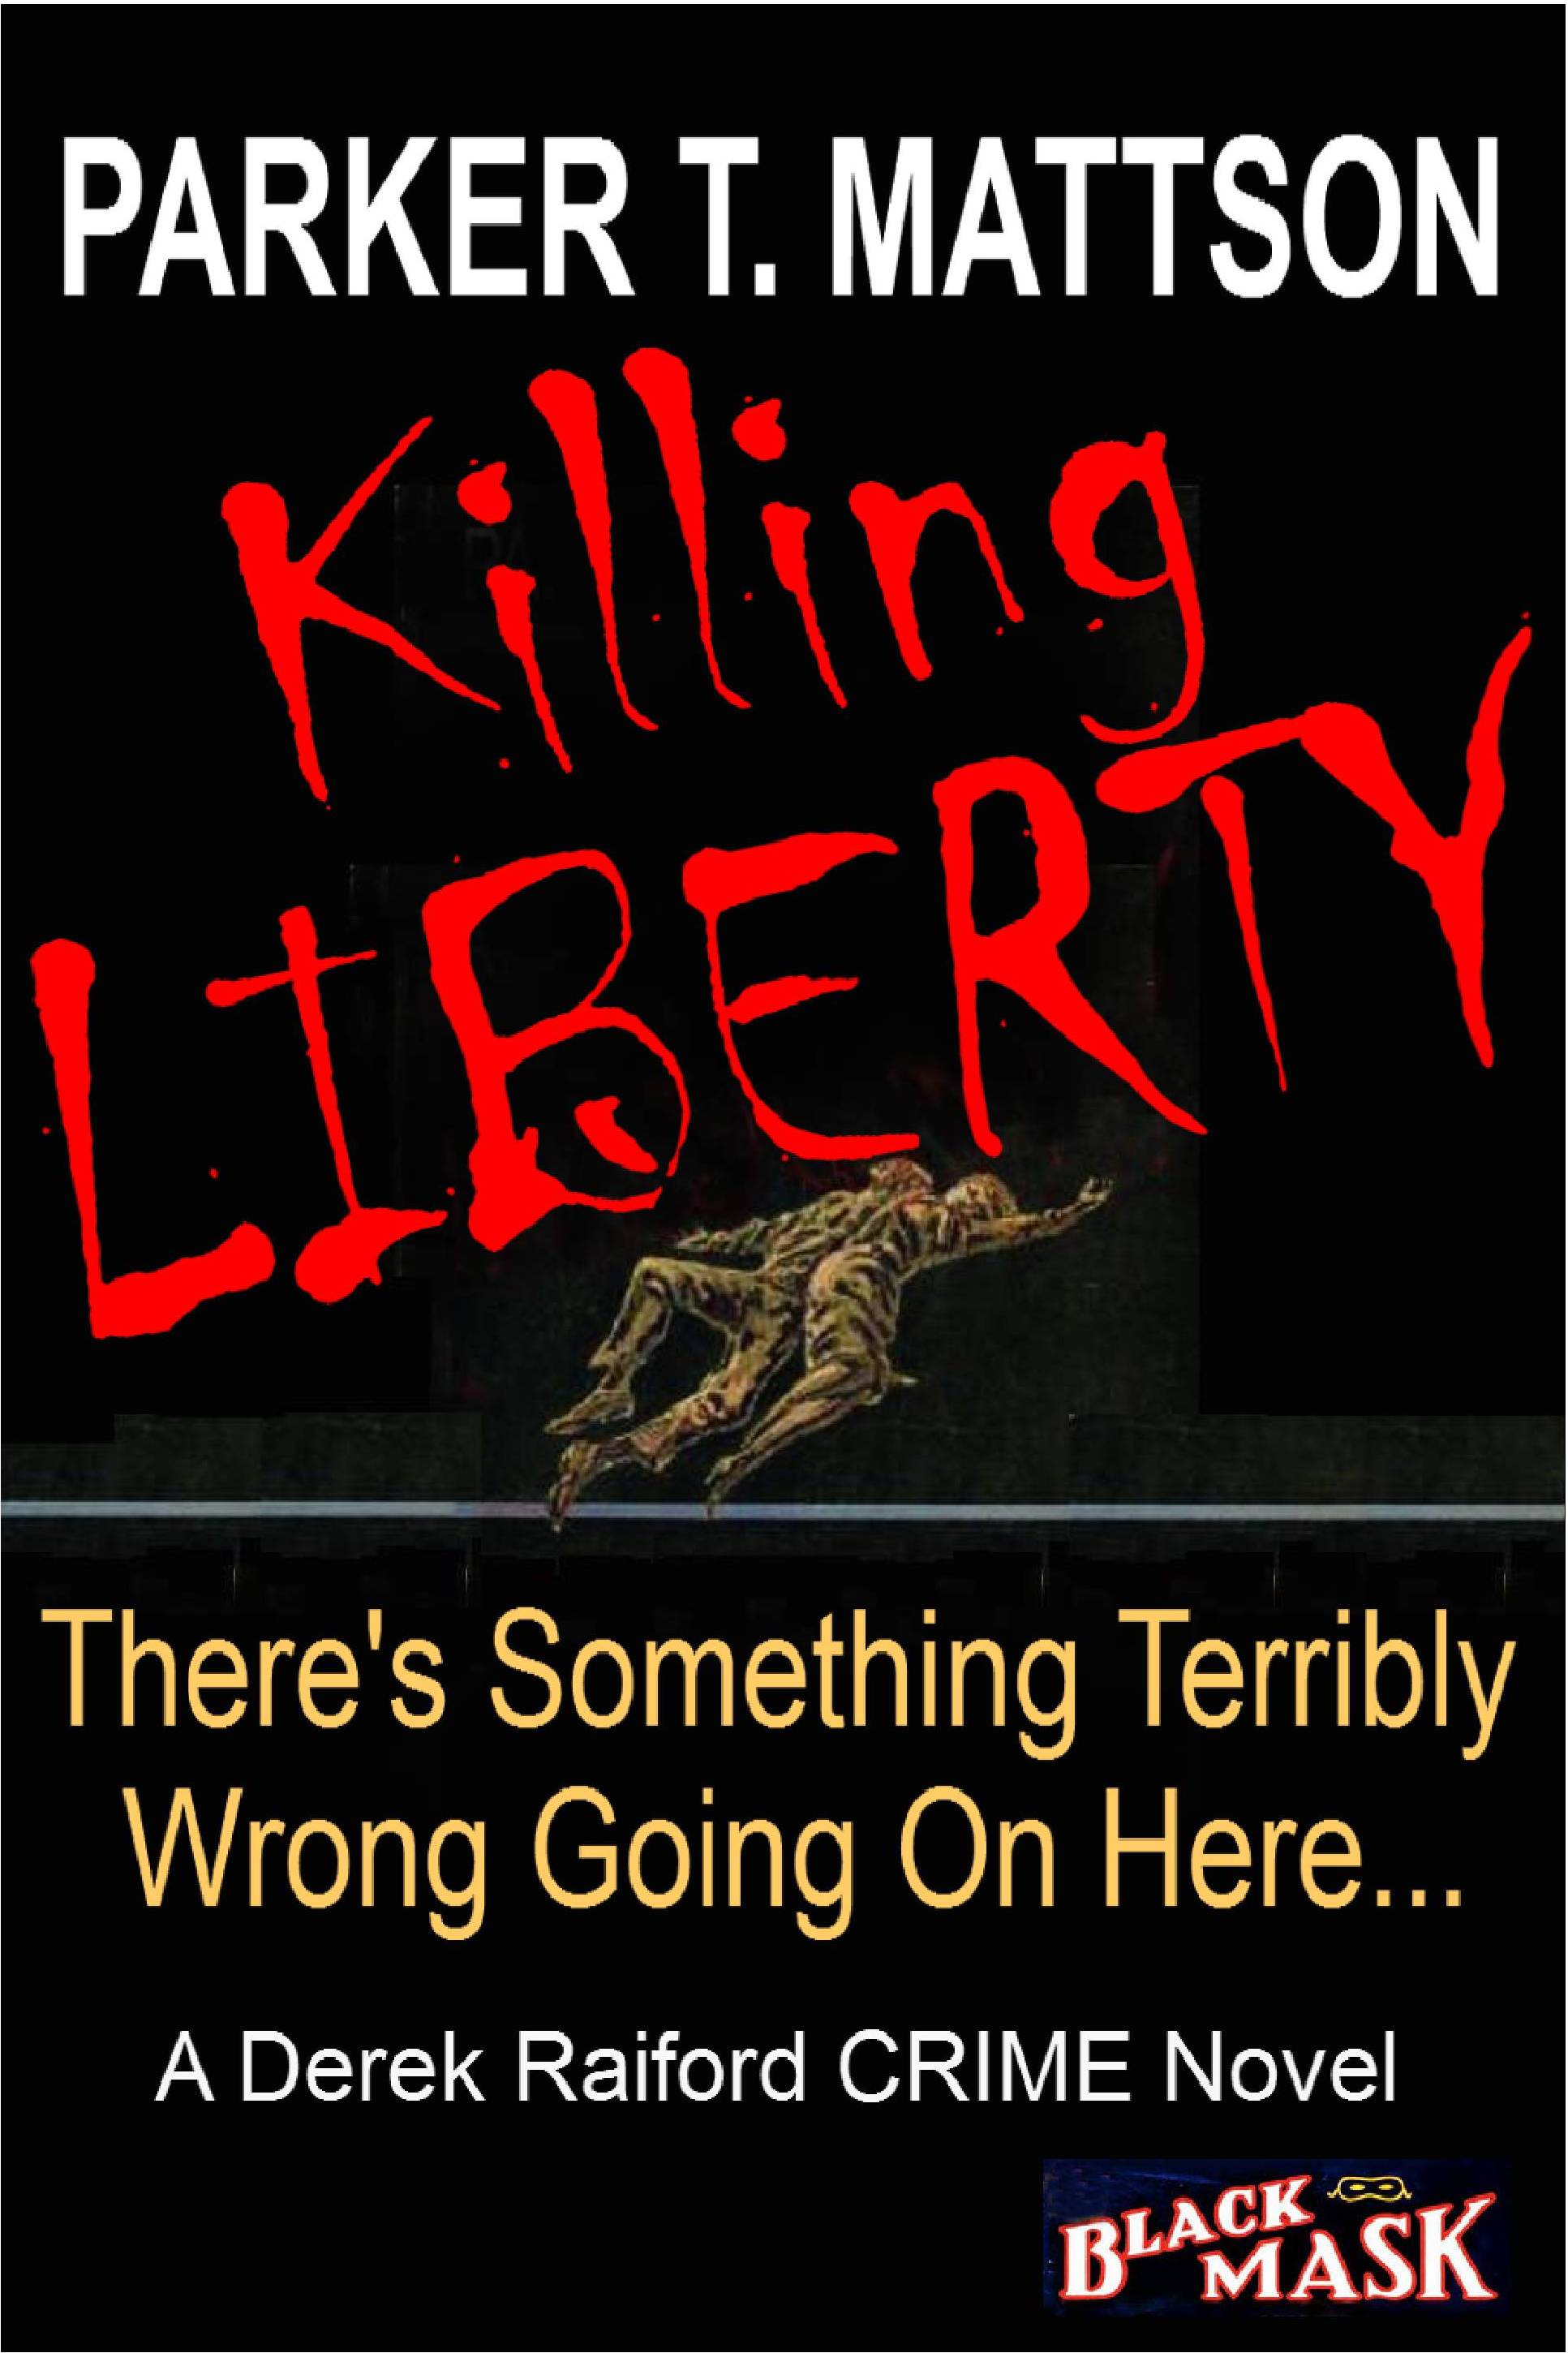 Killing Liberty written as Parker T. Mattson